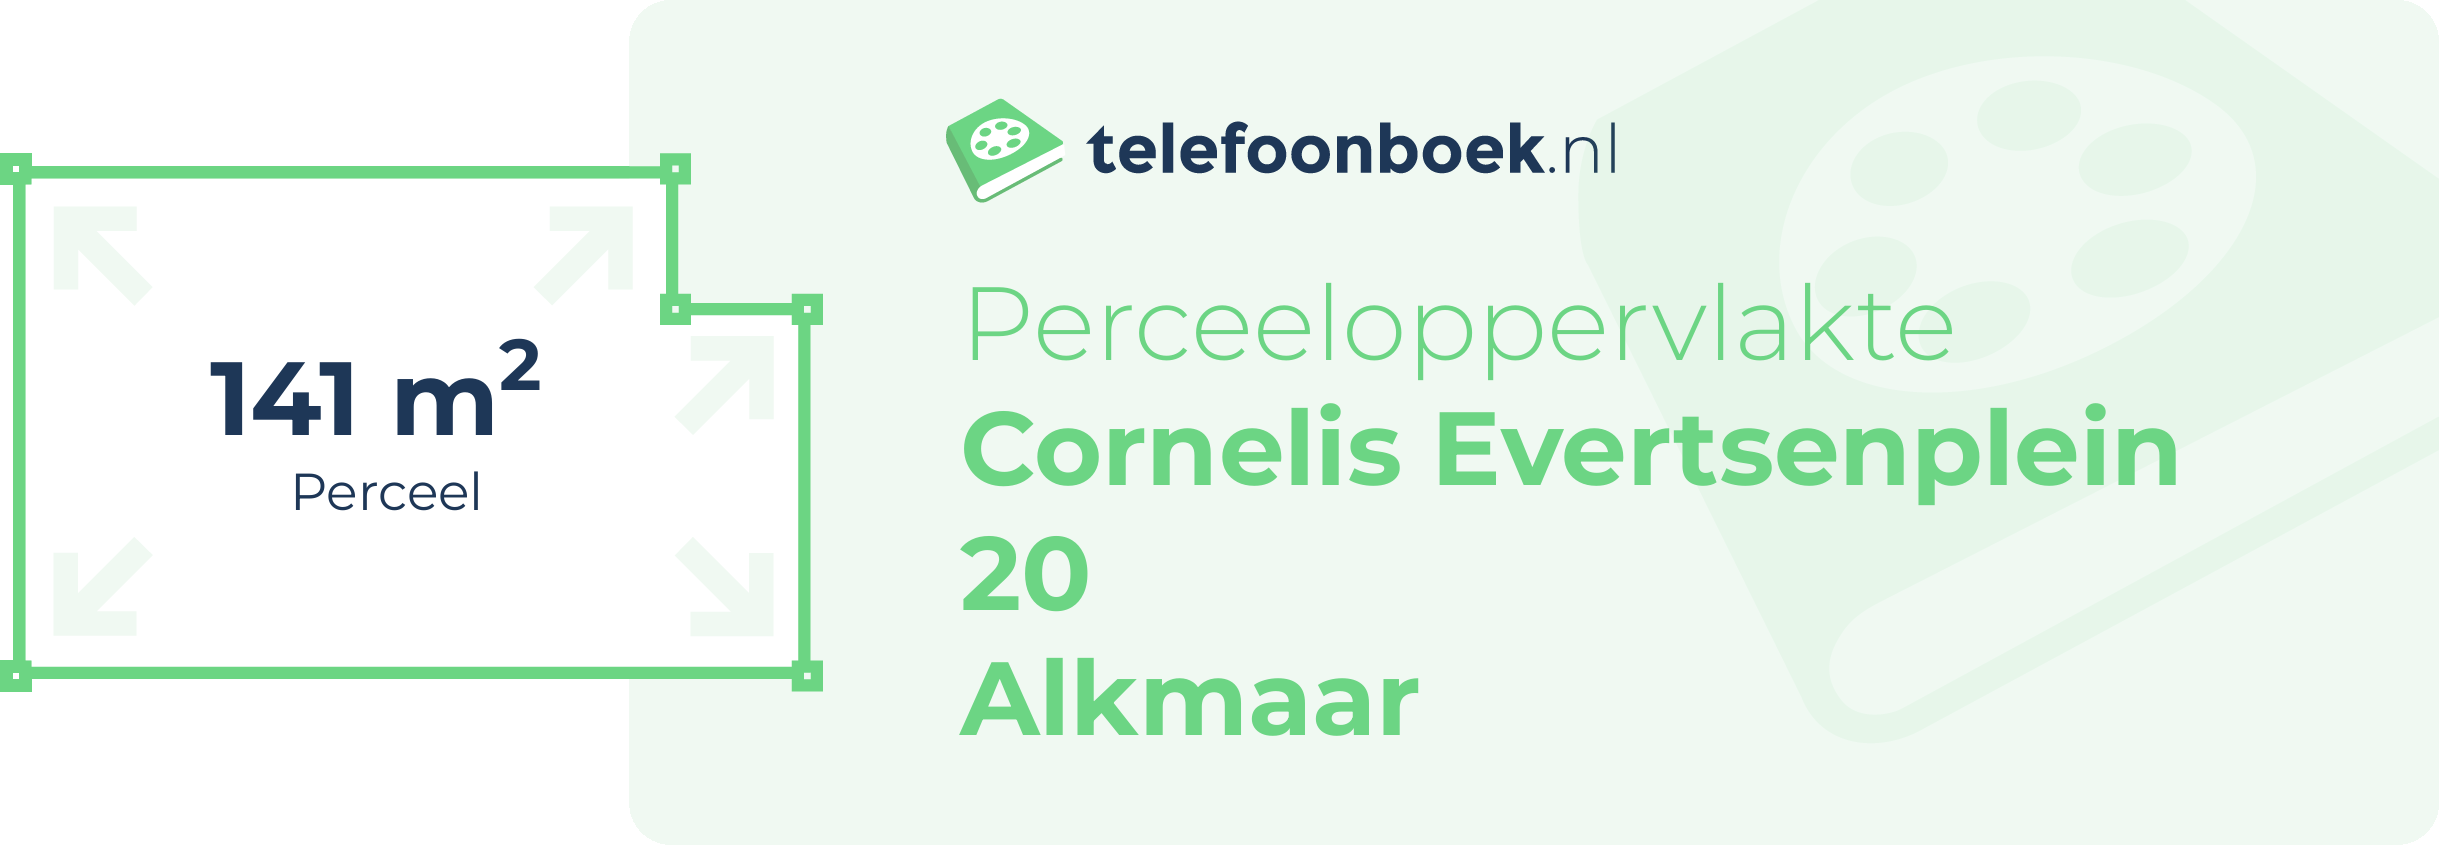 Perceeloppervlakte Cornelis Evertsenplein 20 Alkmaar